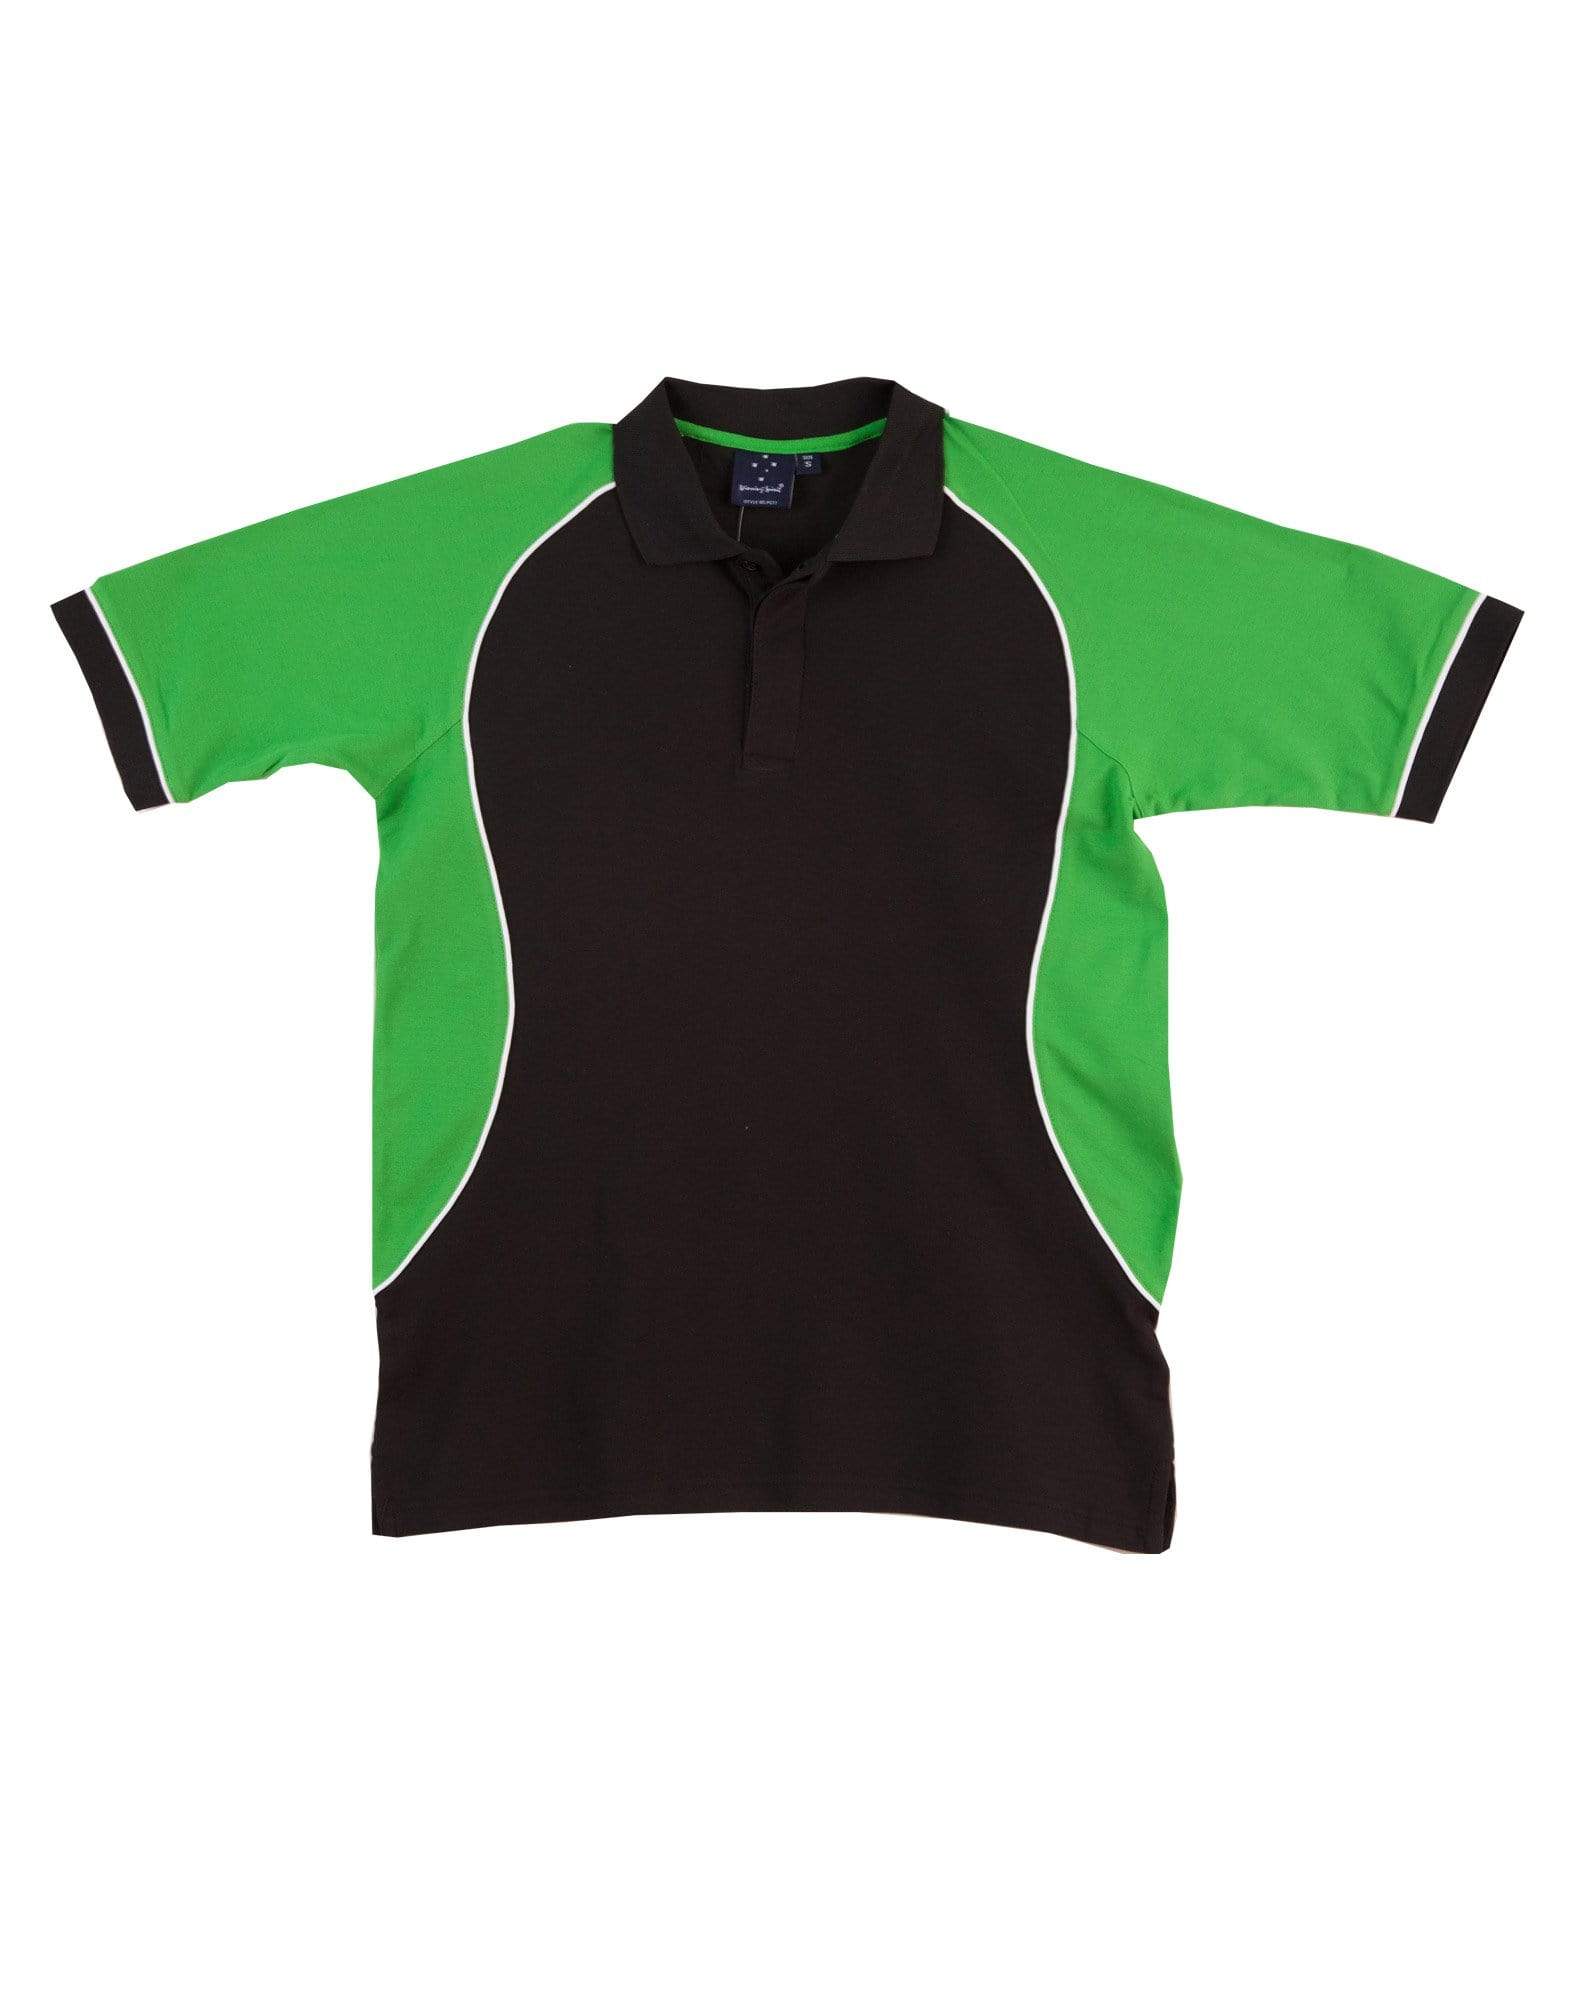 Winning Spirit Casual Wear Black/White/ Green / S Winning Spirit Arena Polo Shirt  Men's Ps77